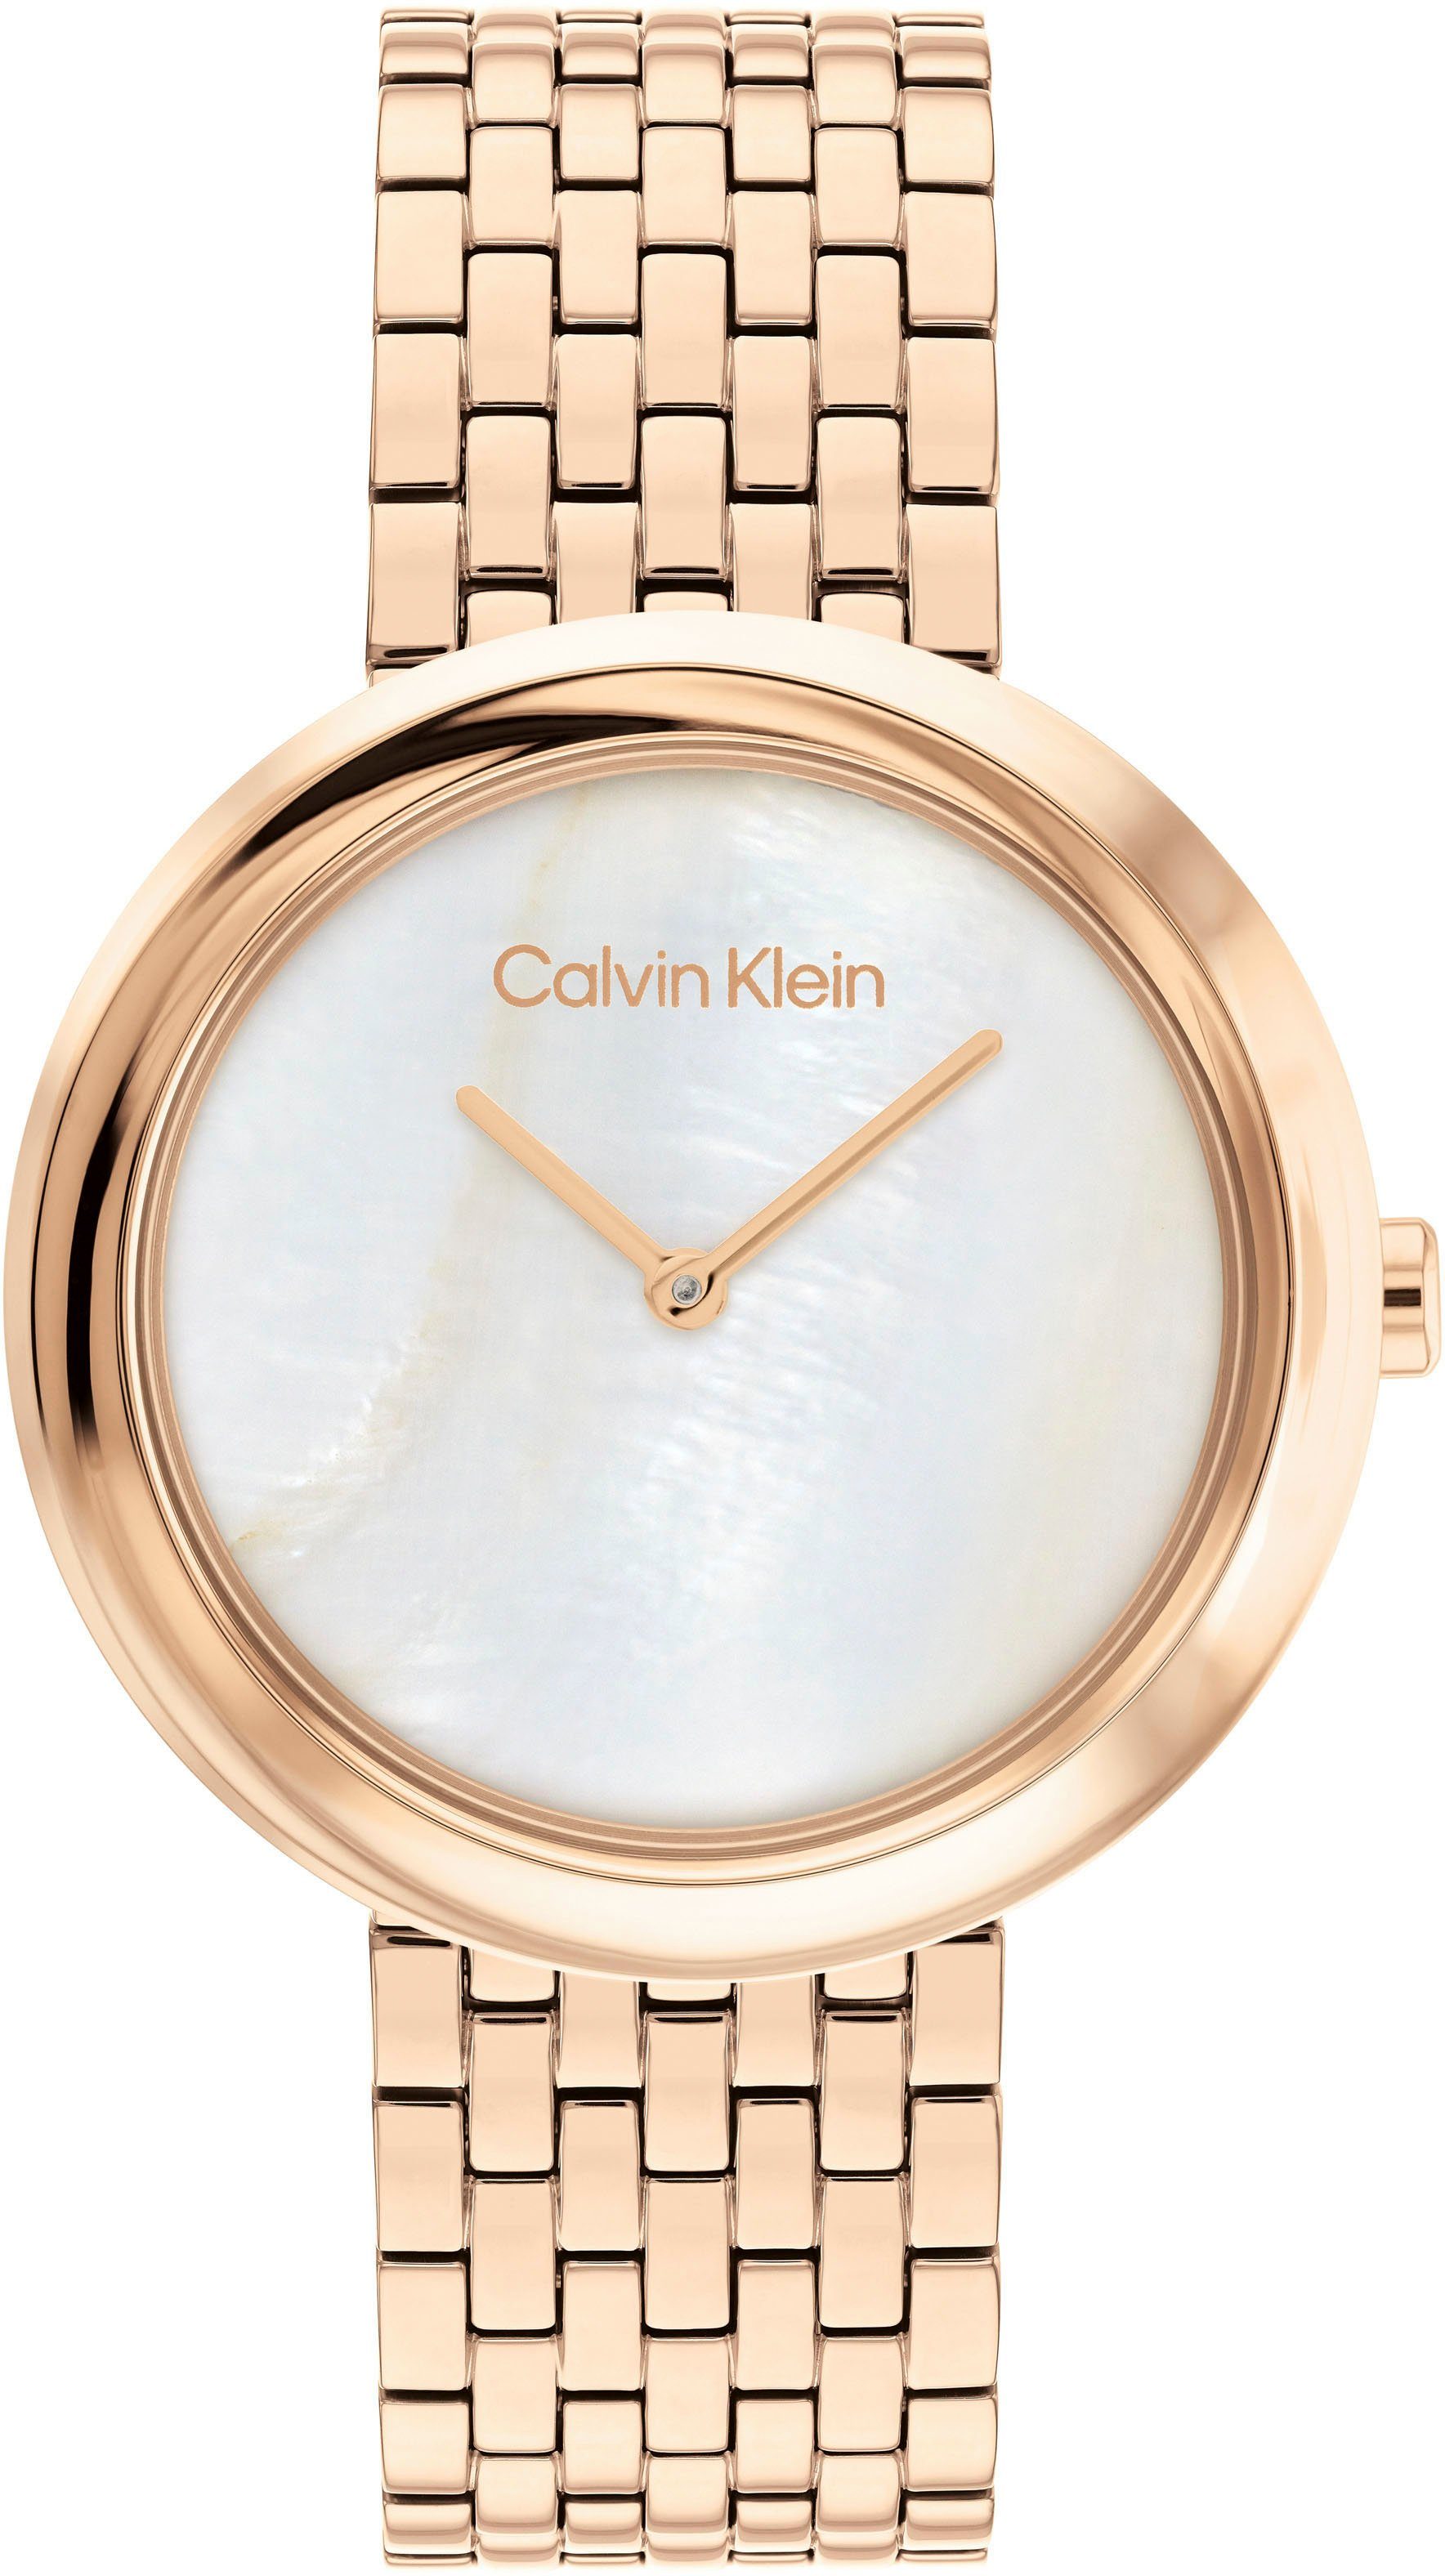 Calvin Klein Damen Armbanduhren online kaufen | OTTO